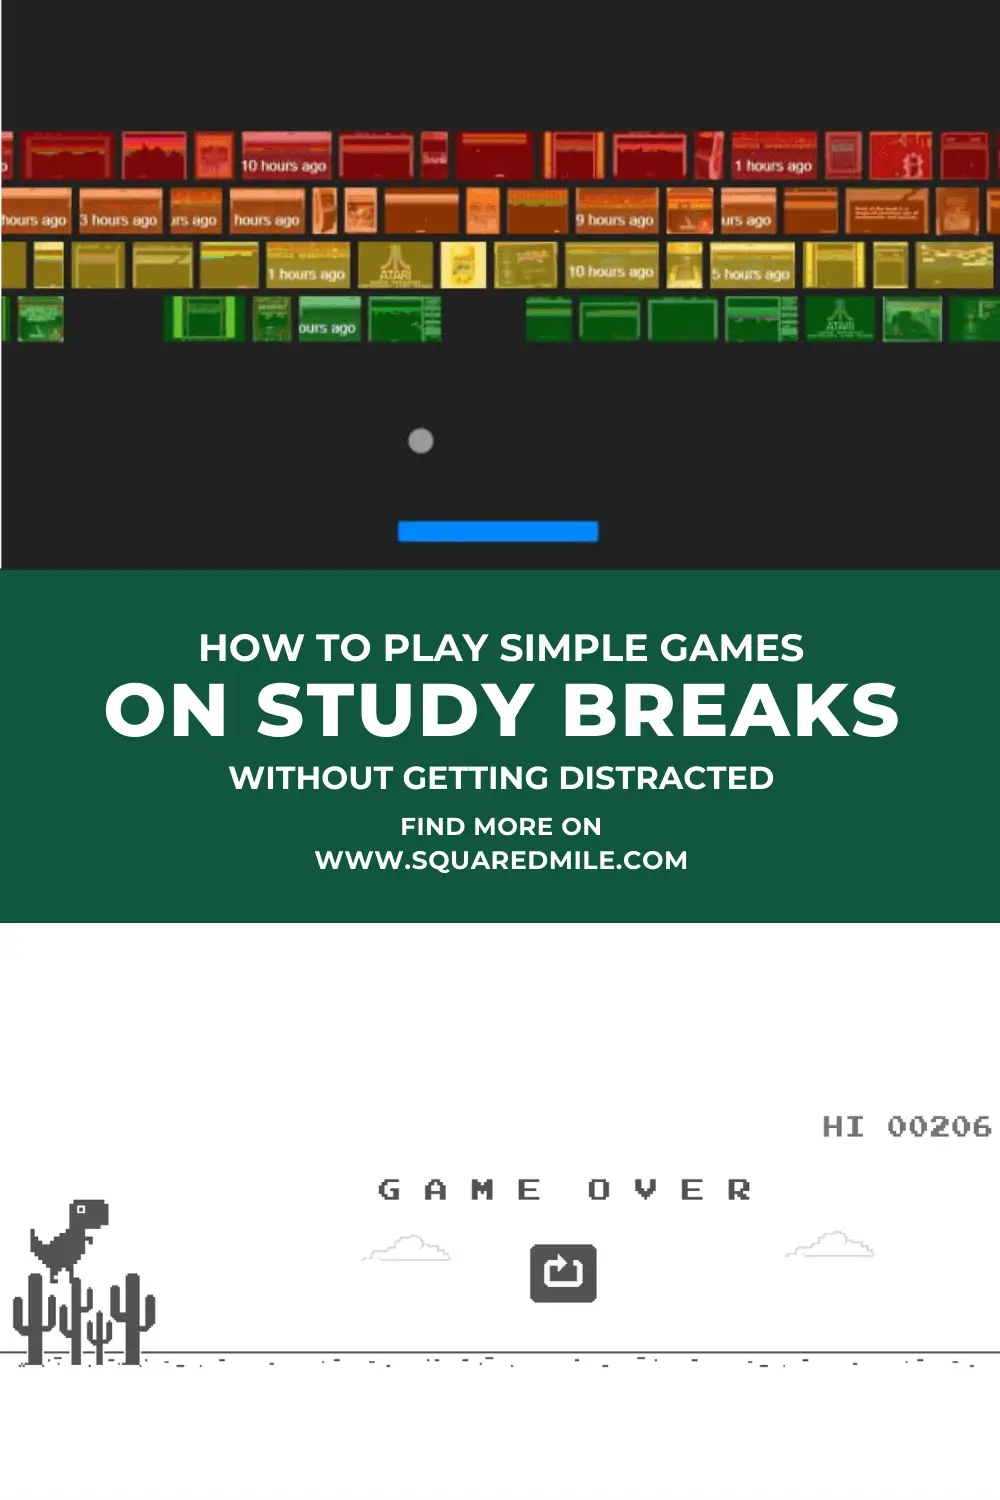 Play Atari Breakout on Google Images